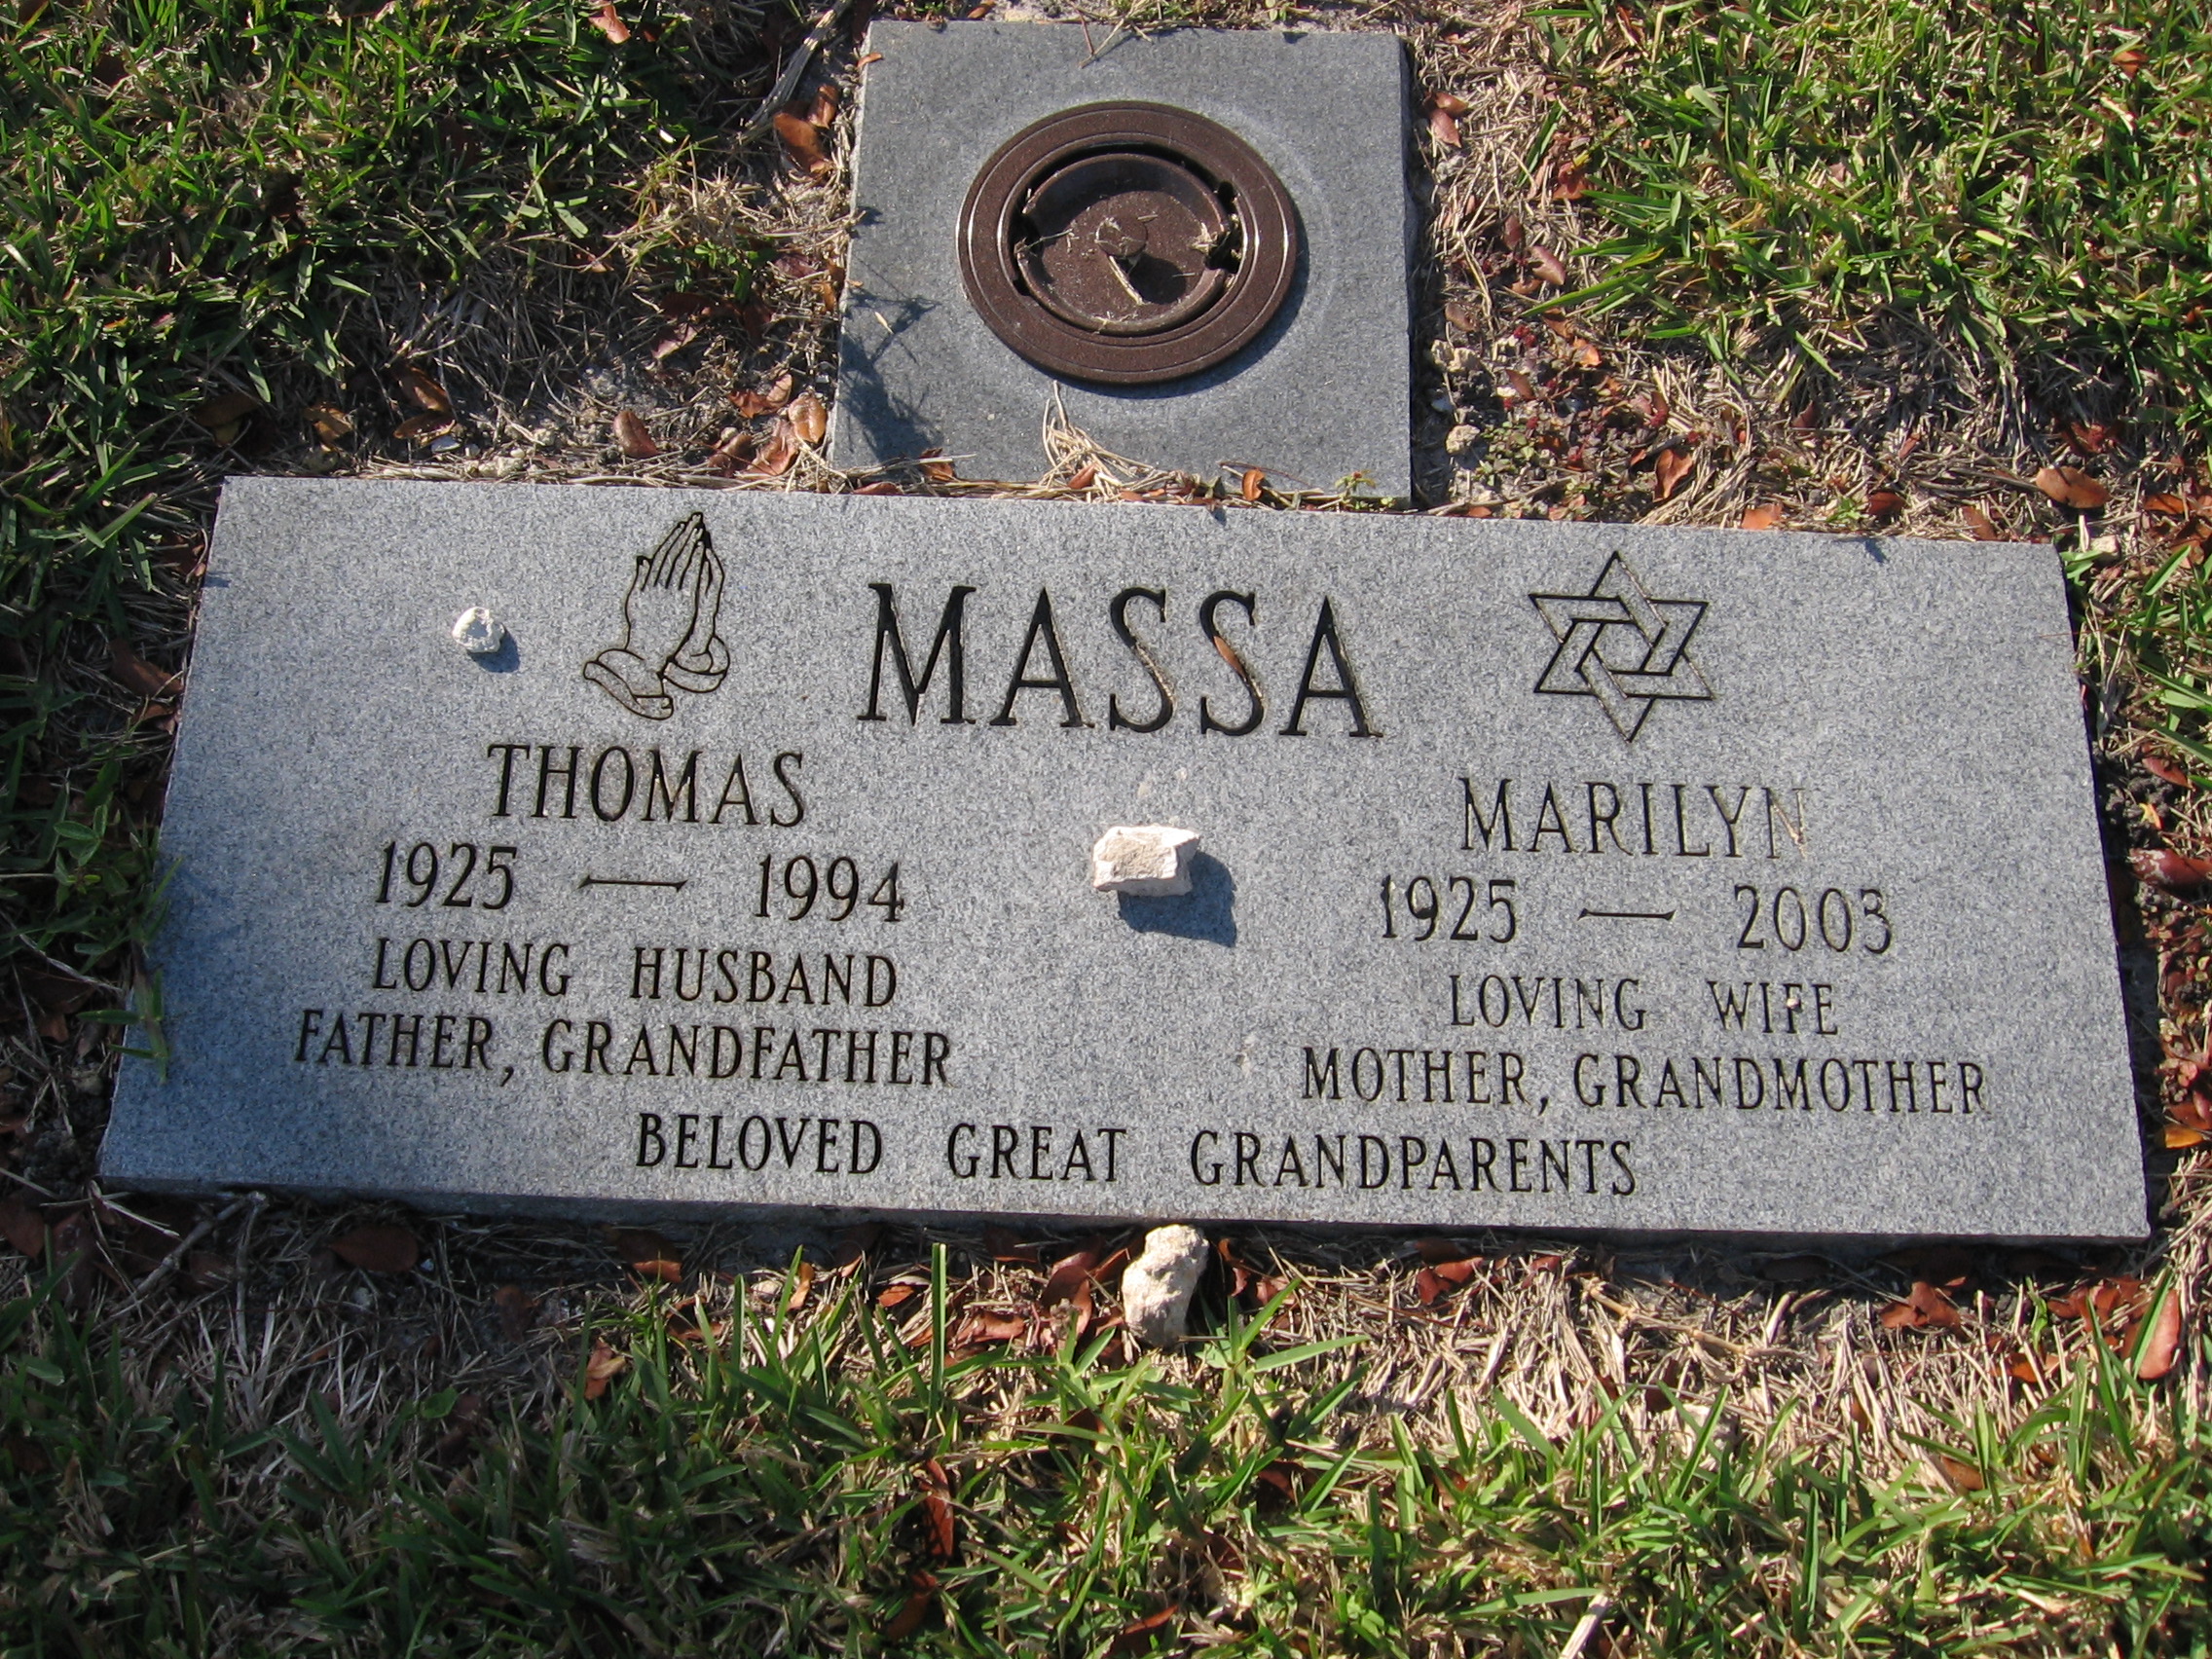 Thomas Massa